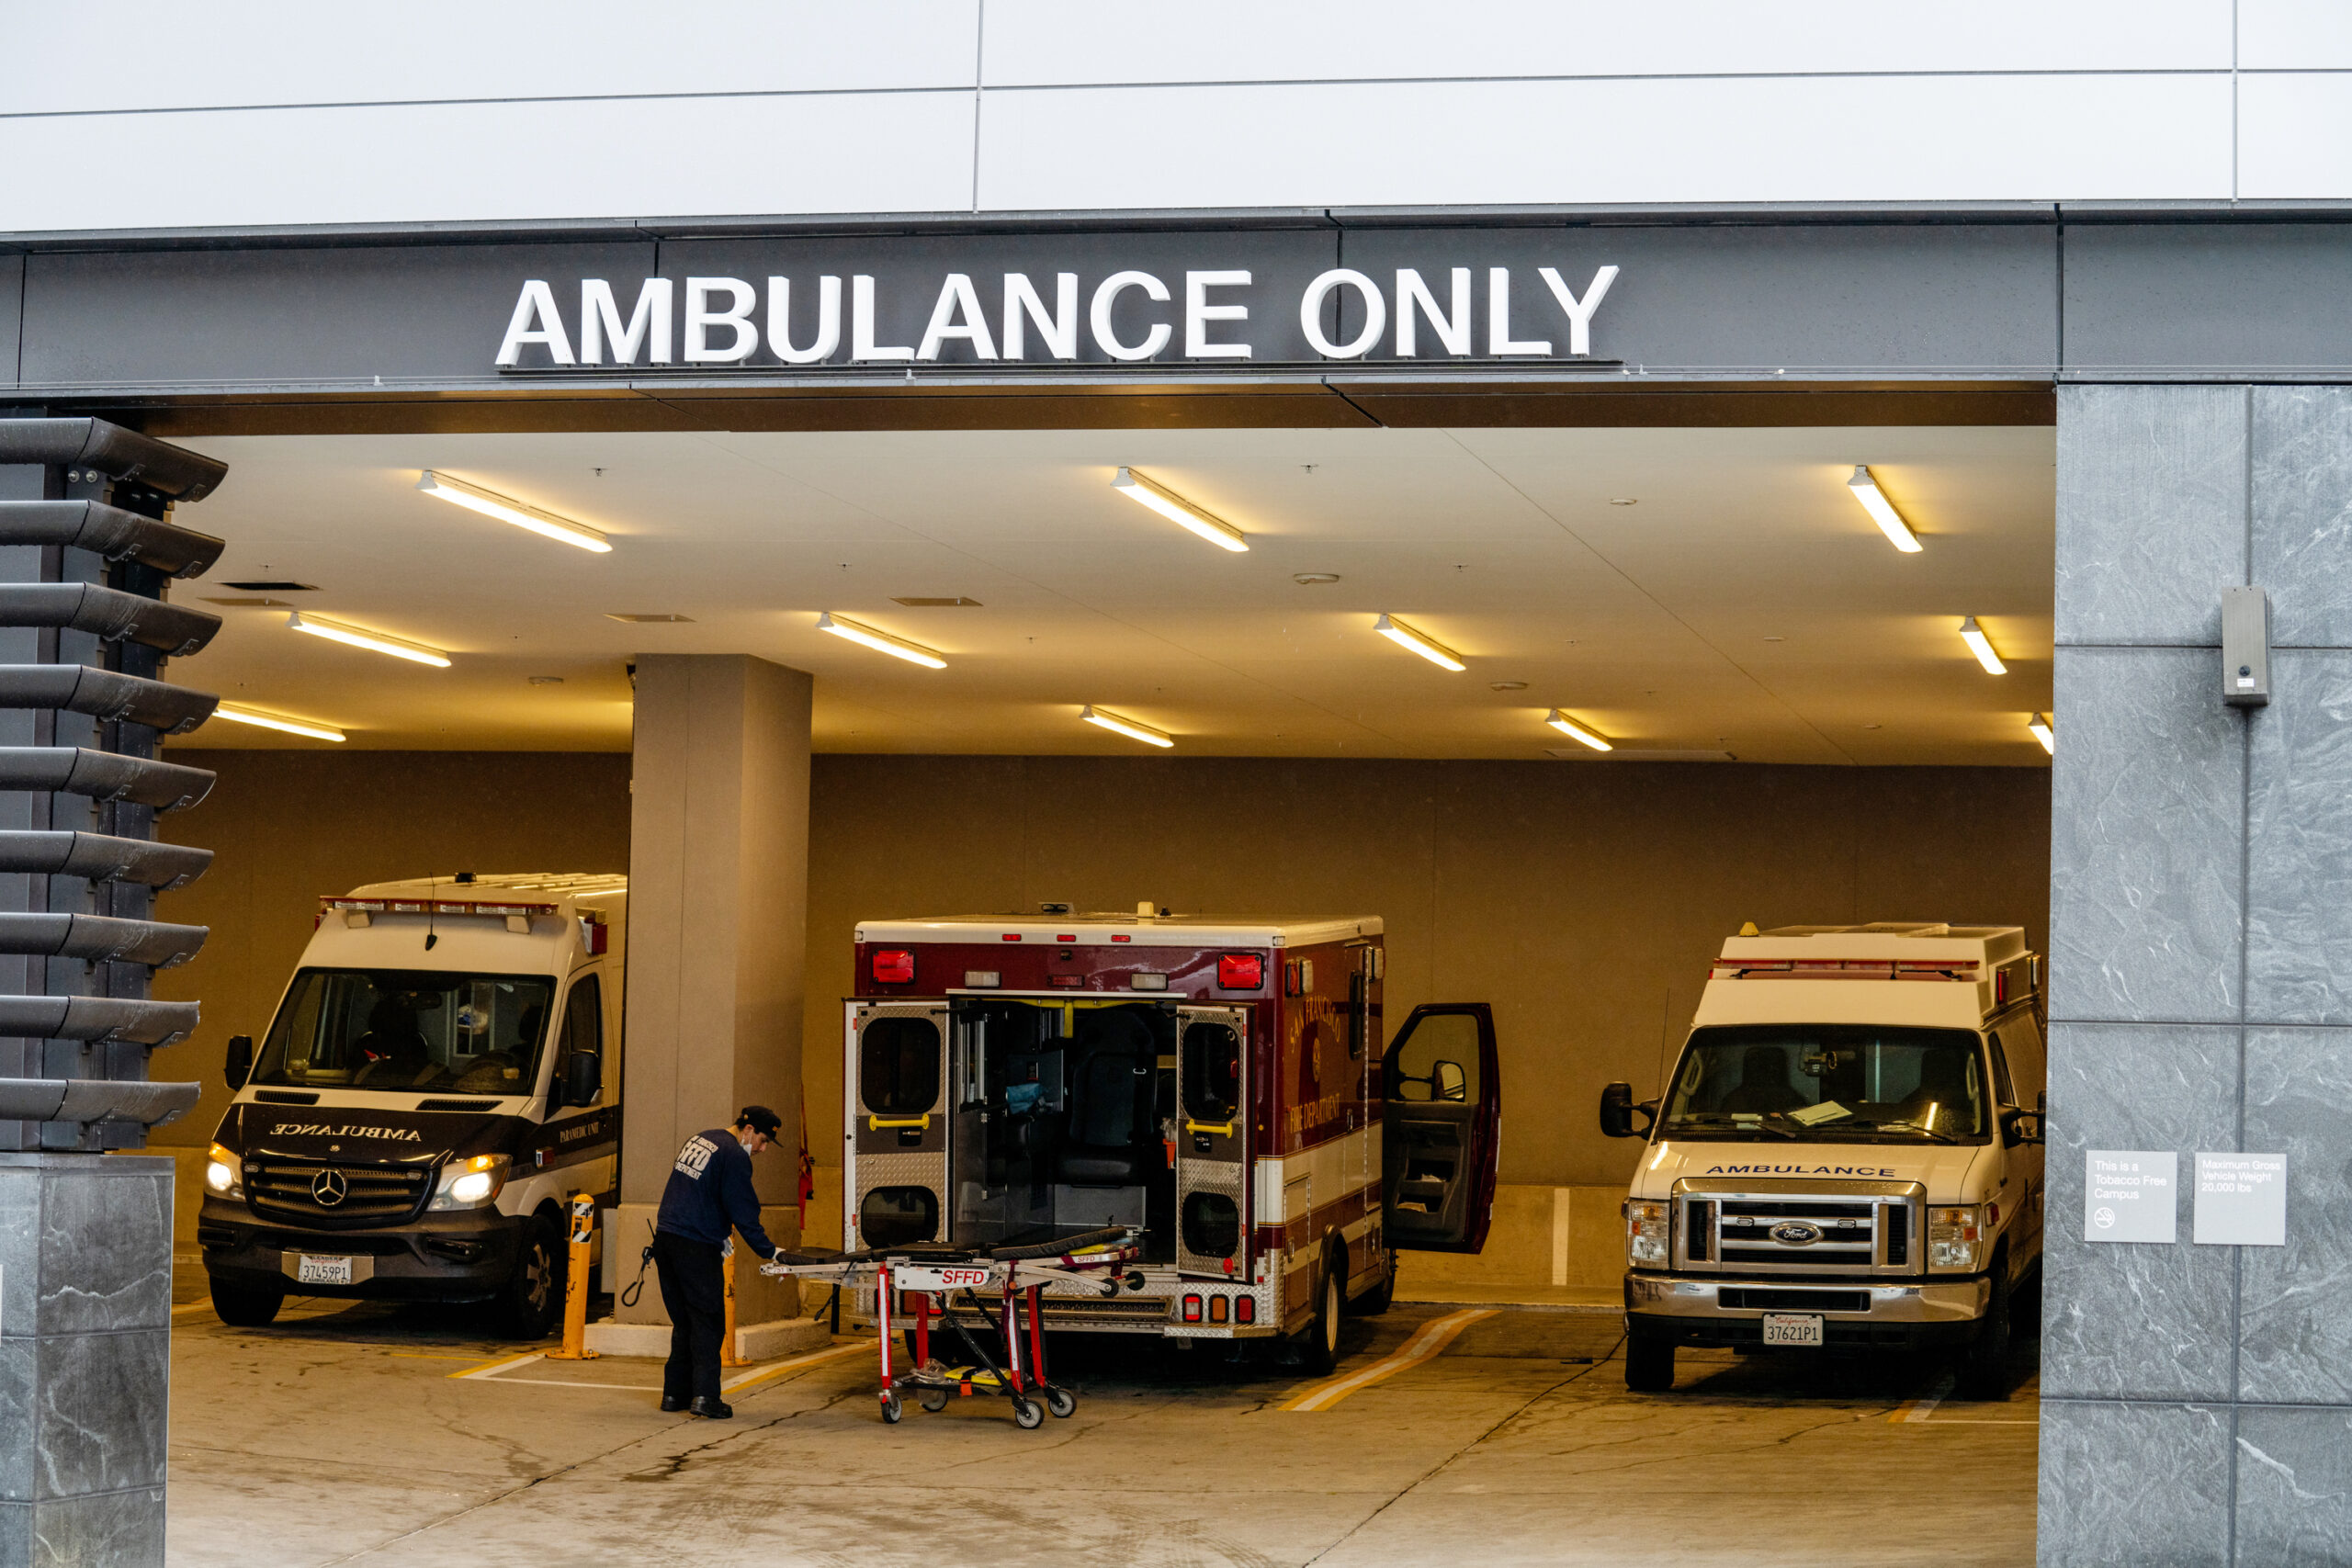 Three ambulances parked inside parking lot